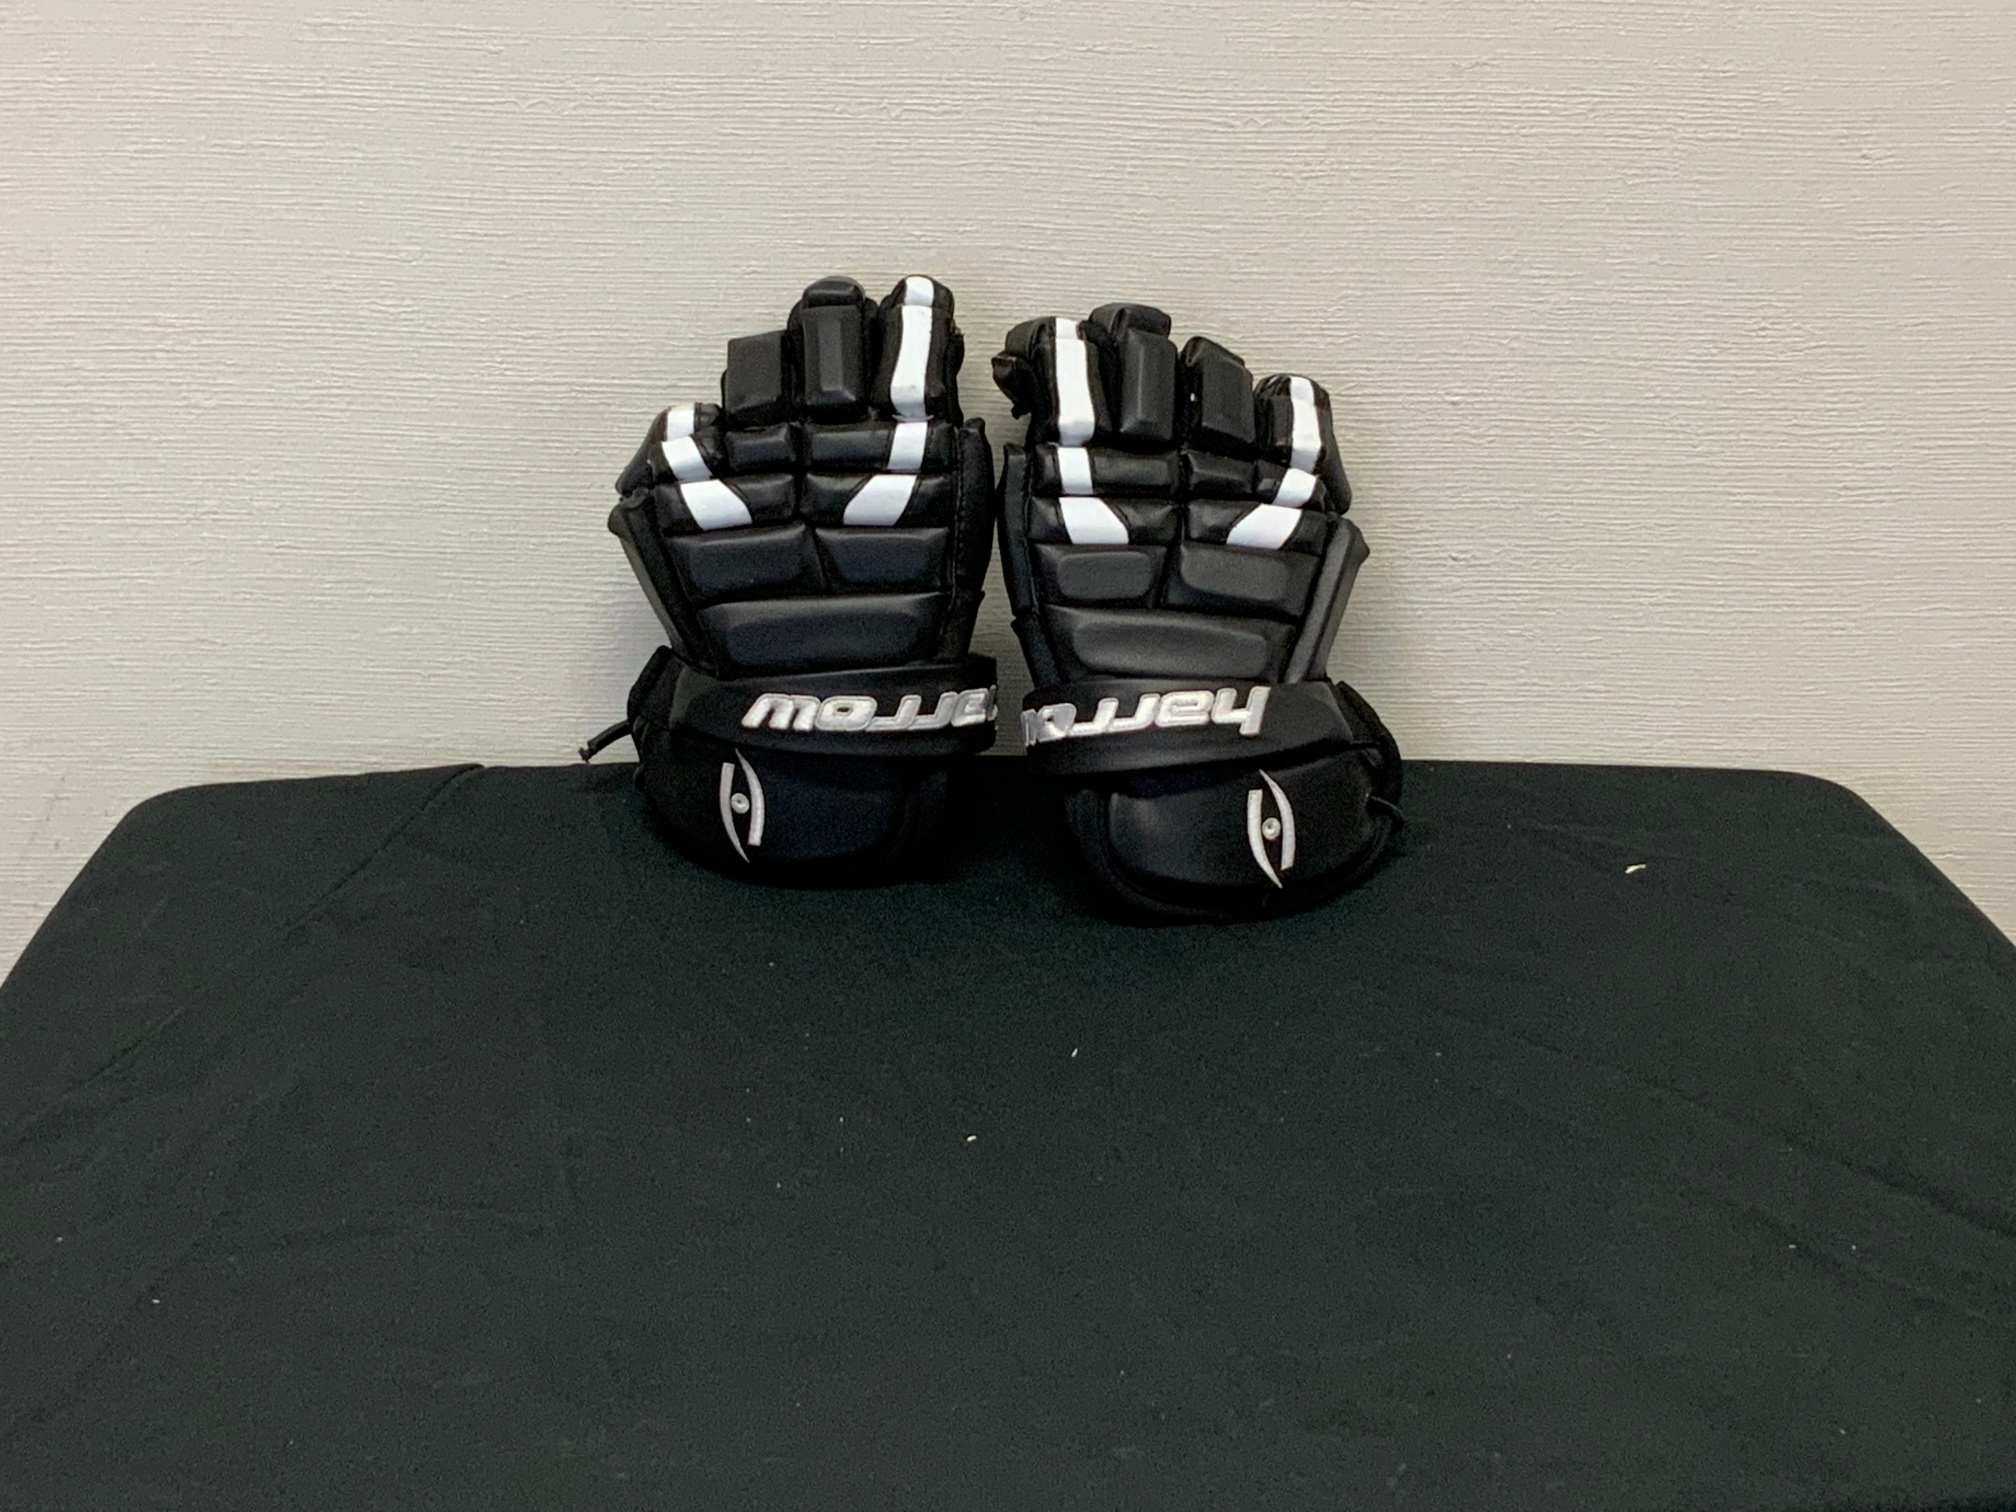 New Player's Harrow S2 Lacrosse Gloves 10"